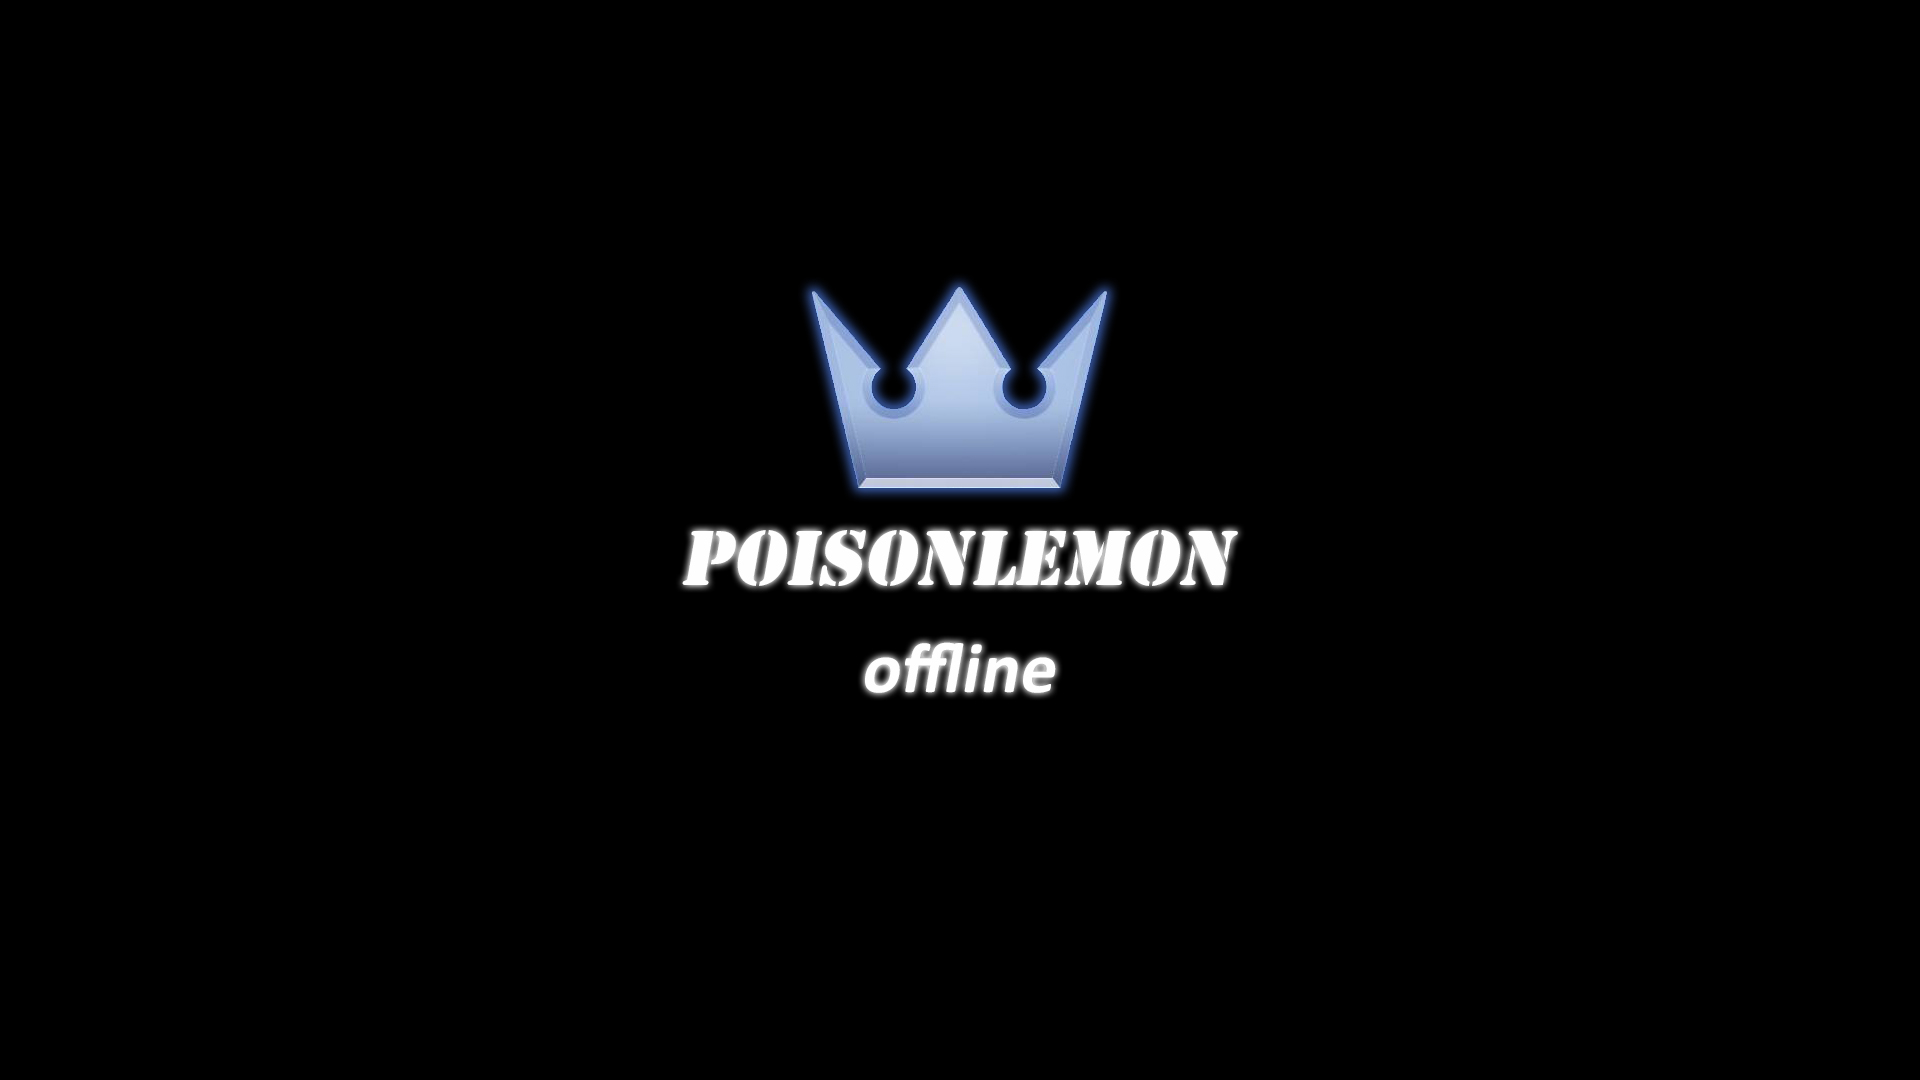 Steam Workshop Poisonlemon Mod Park - free 30k credits swim for admin roblox